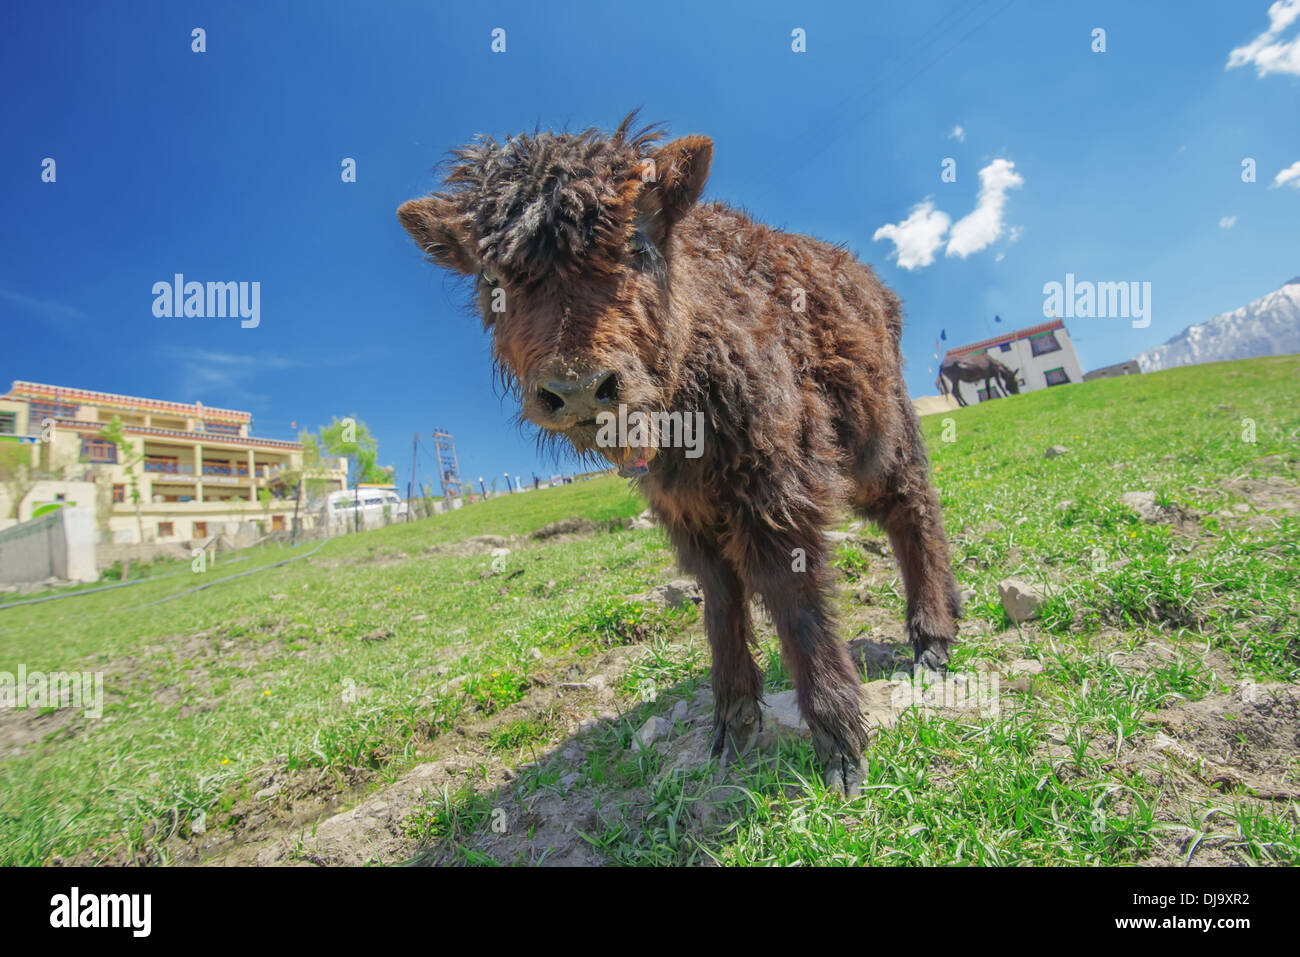 small yak on green field in mountain Stock Photo